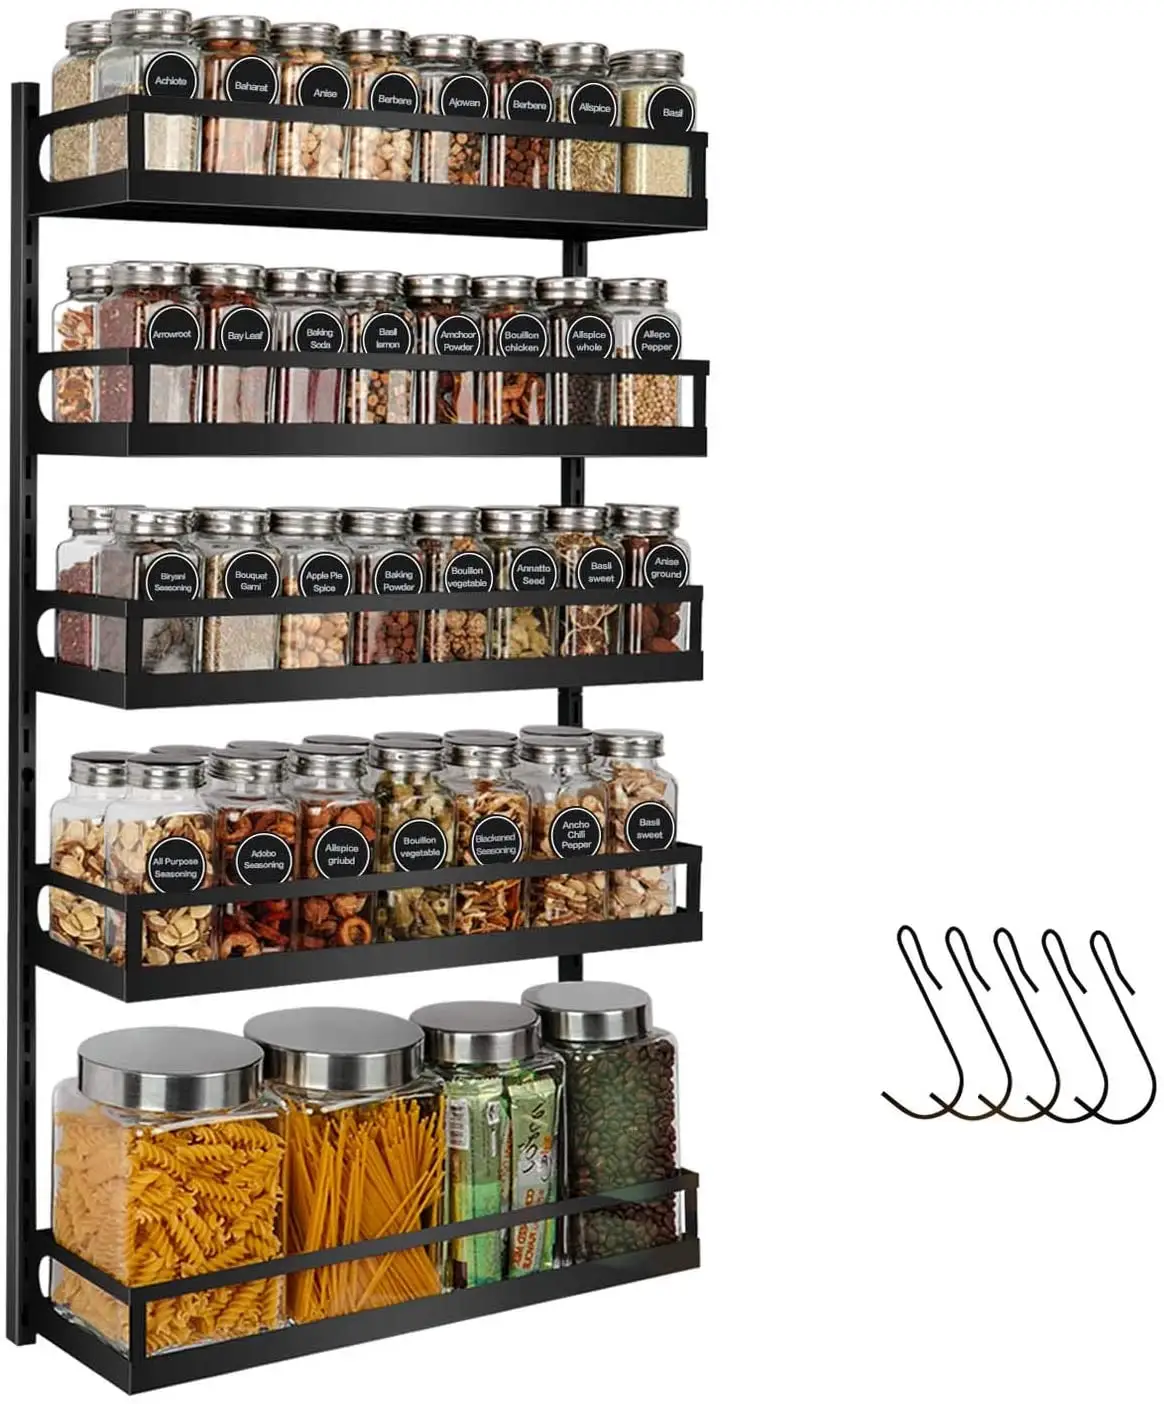 Wall Mount Spice Rack Organizer 5 Tier Height Adjustable Hanging Spice Shelf Storage for Kitchen Pantry Cabinet Door